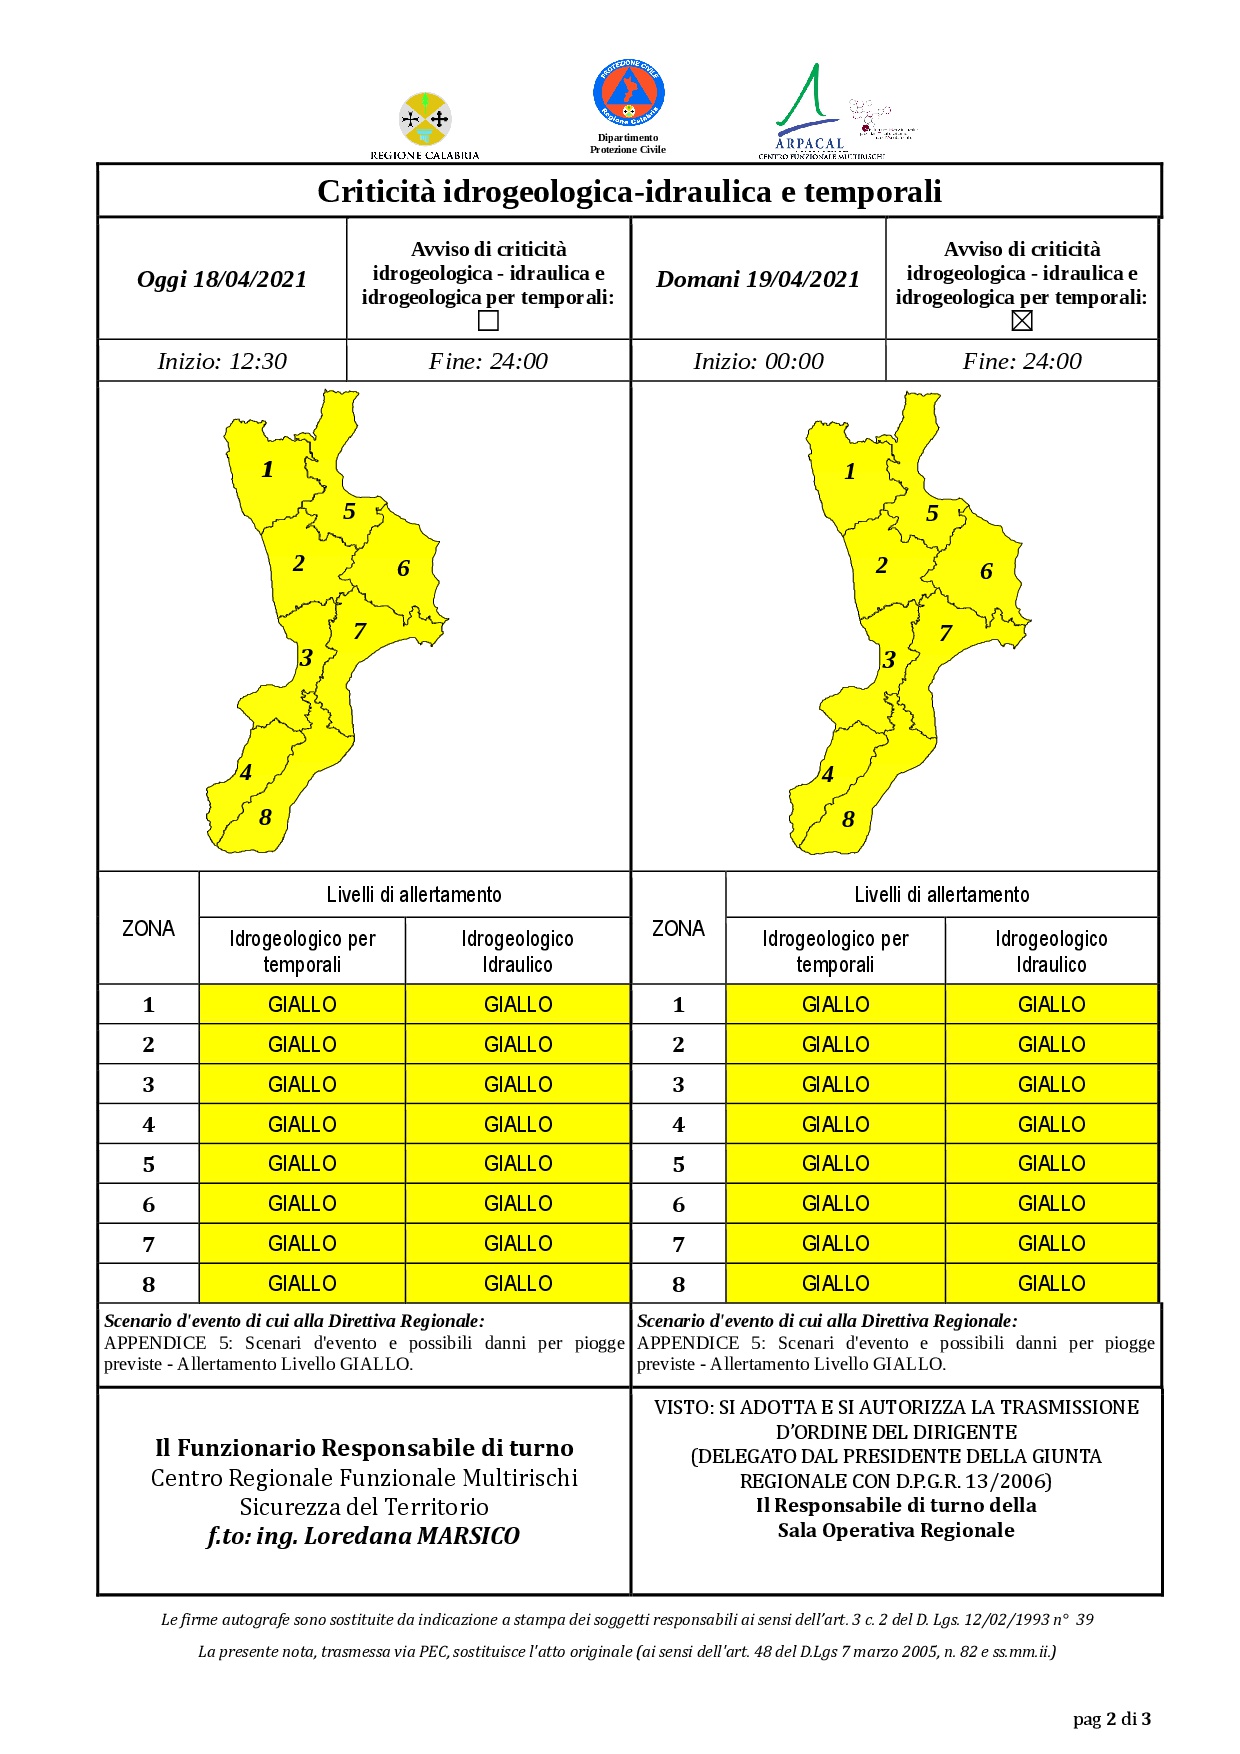 Criticità idrogeologica-idraulica e temporali in Calabria 18-04-2021